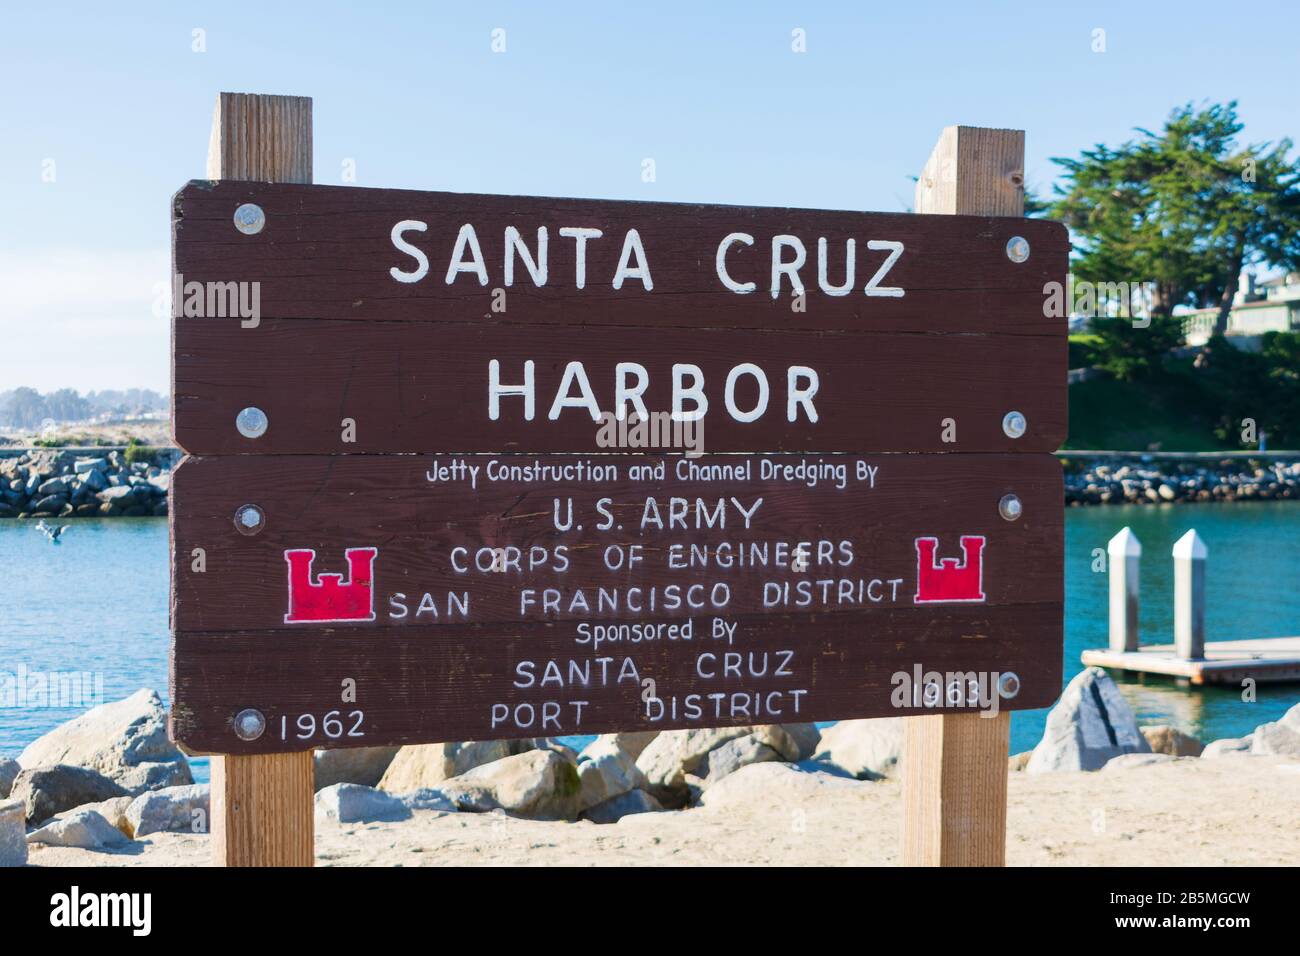 Santa Cruz Harbor sign. Jetty construction and channel dredging by U.S. Army Corps of Engineers - Santa Cruz, California, USA - December, 2019 Stock Photo